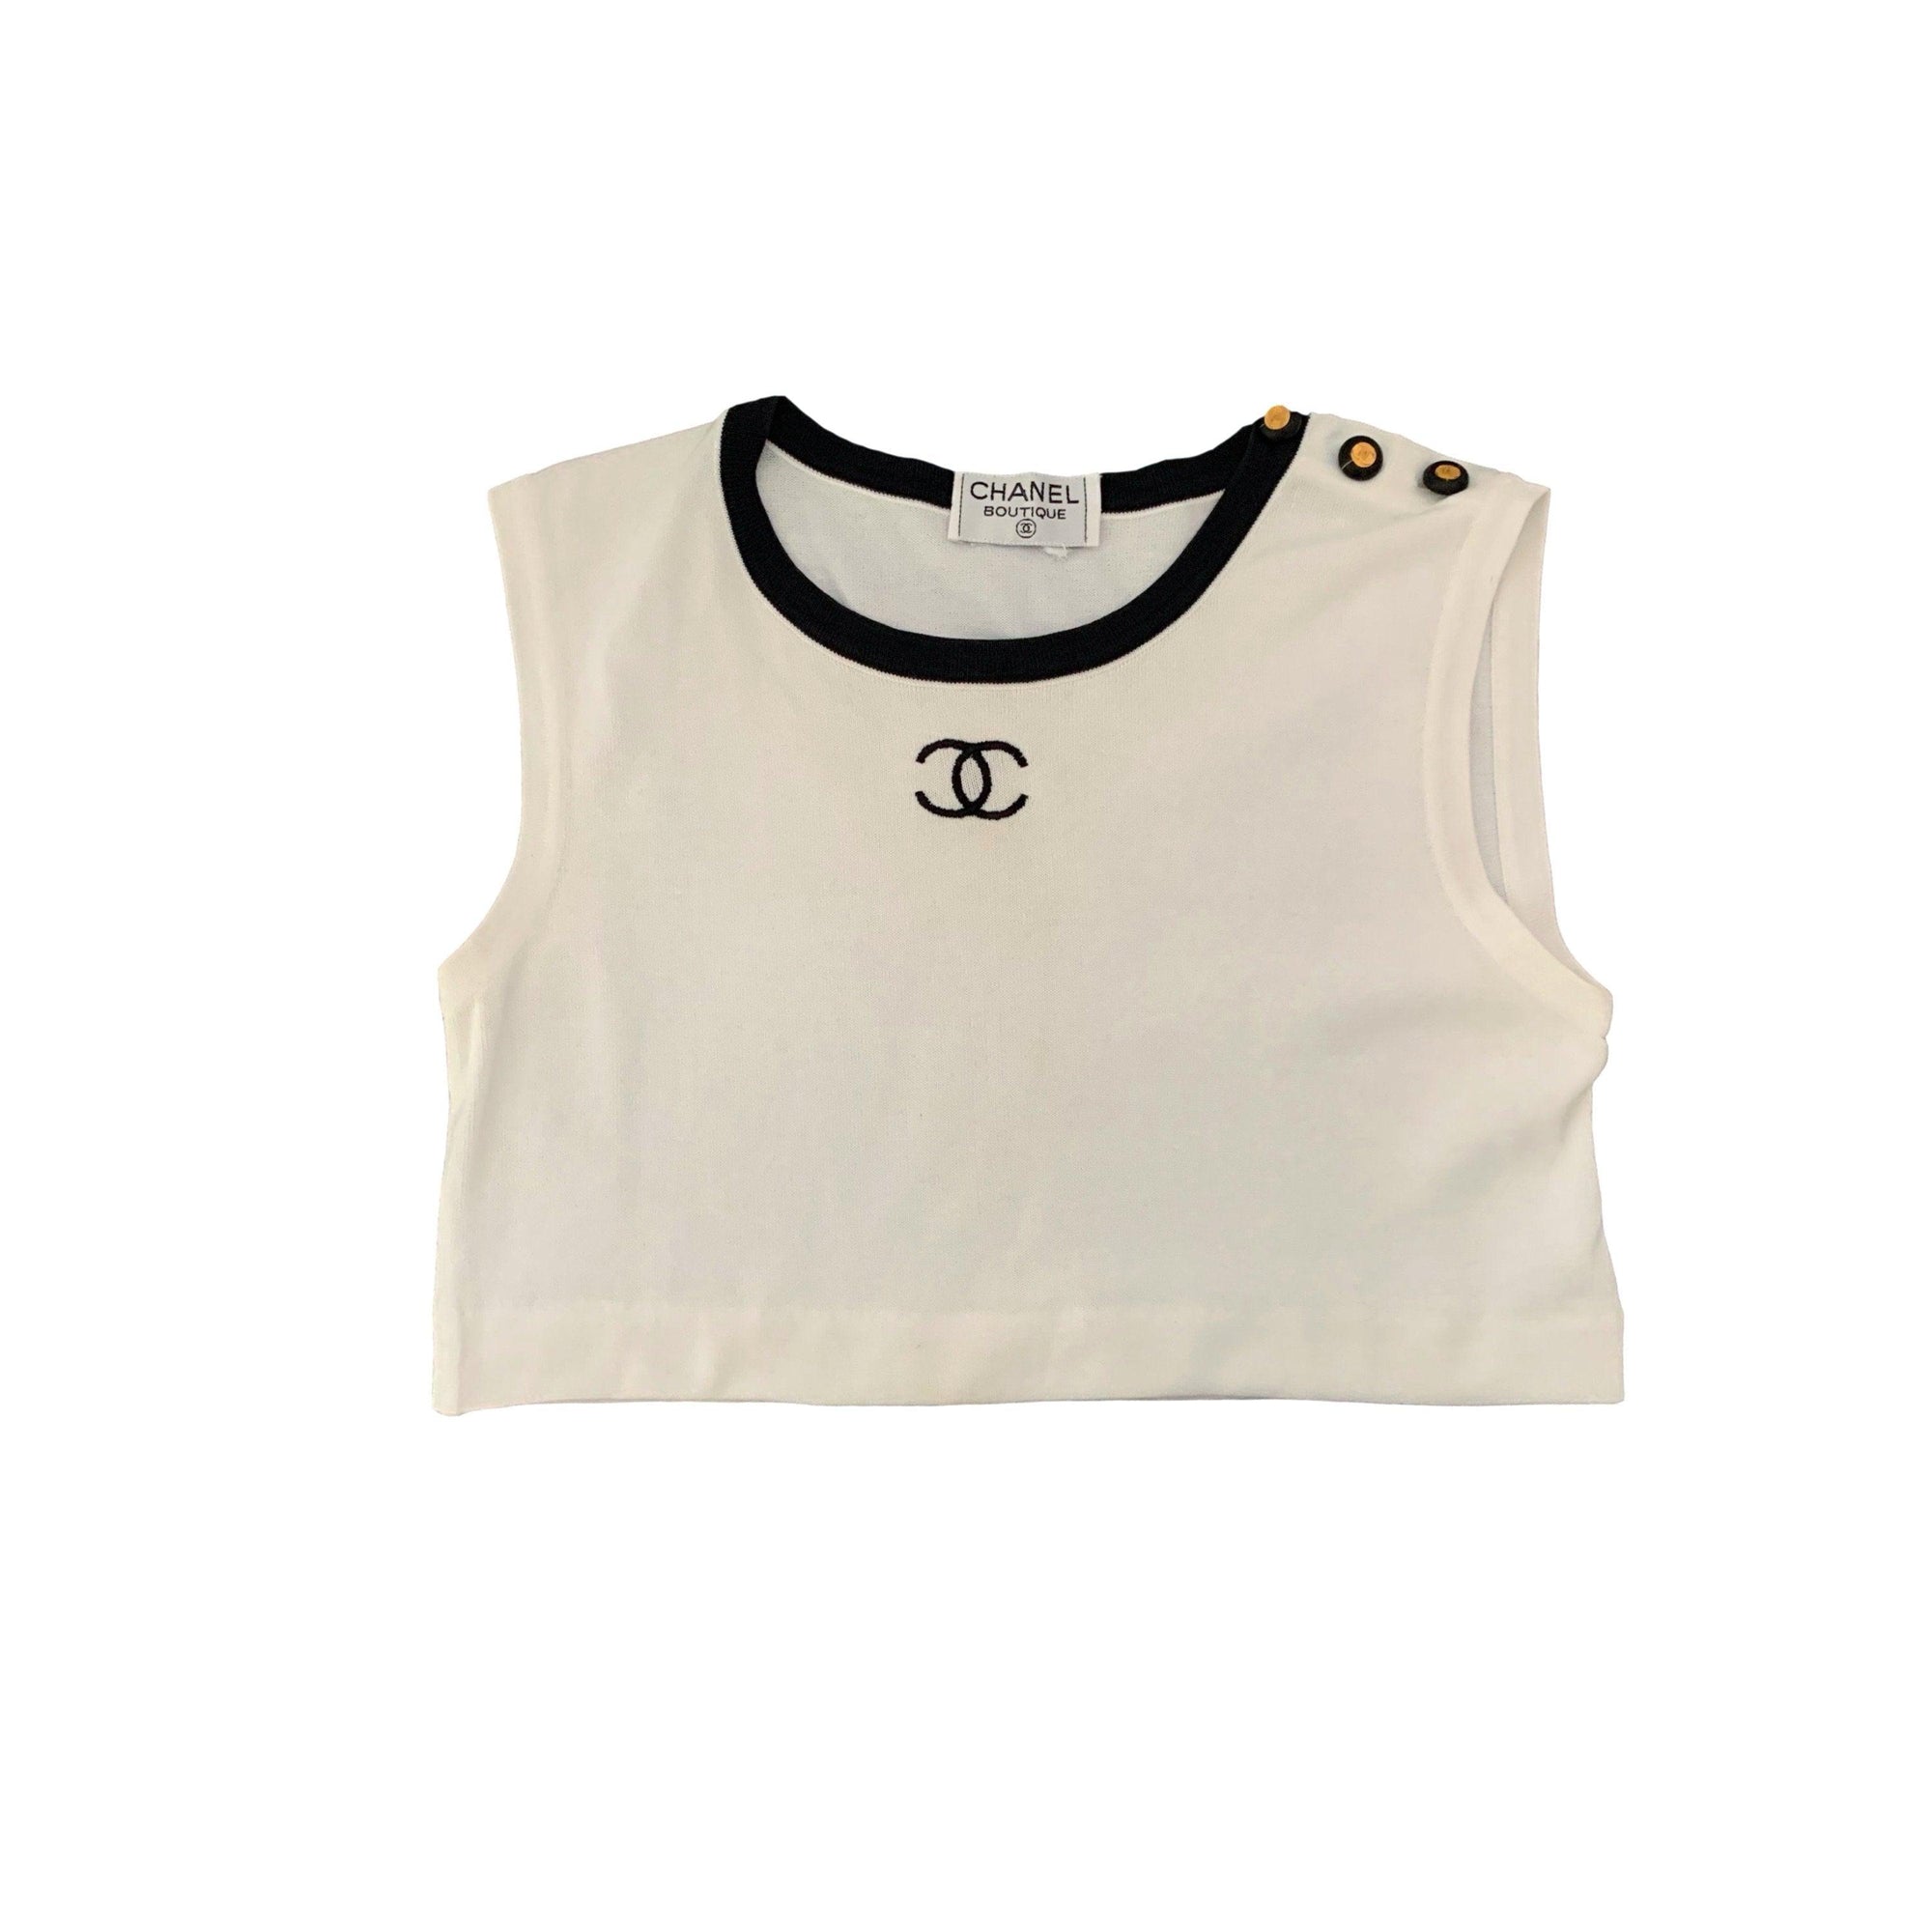 Vintage Chanel Logo White Top 